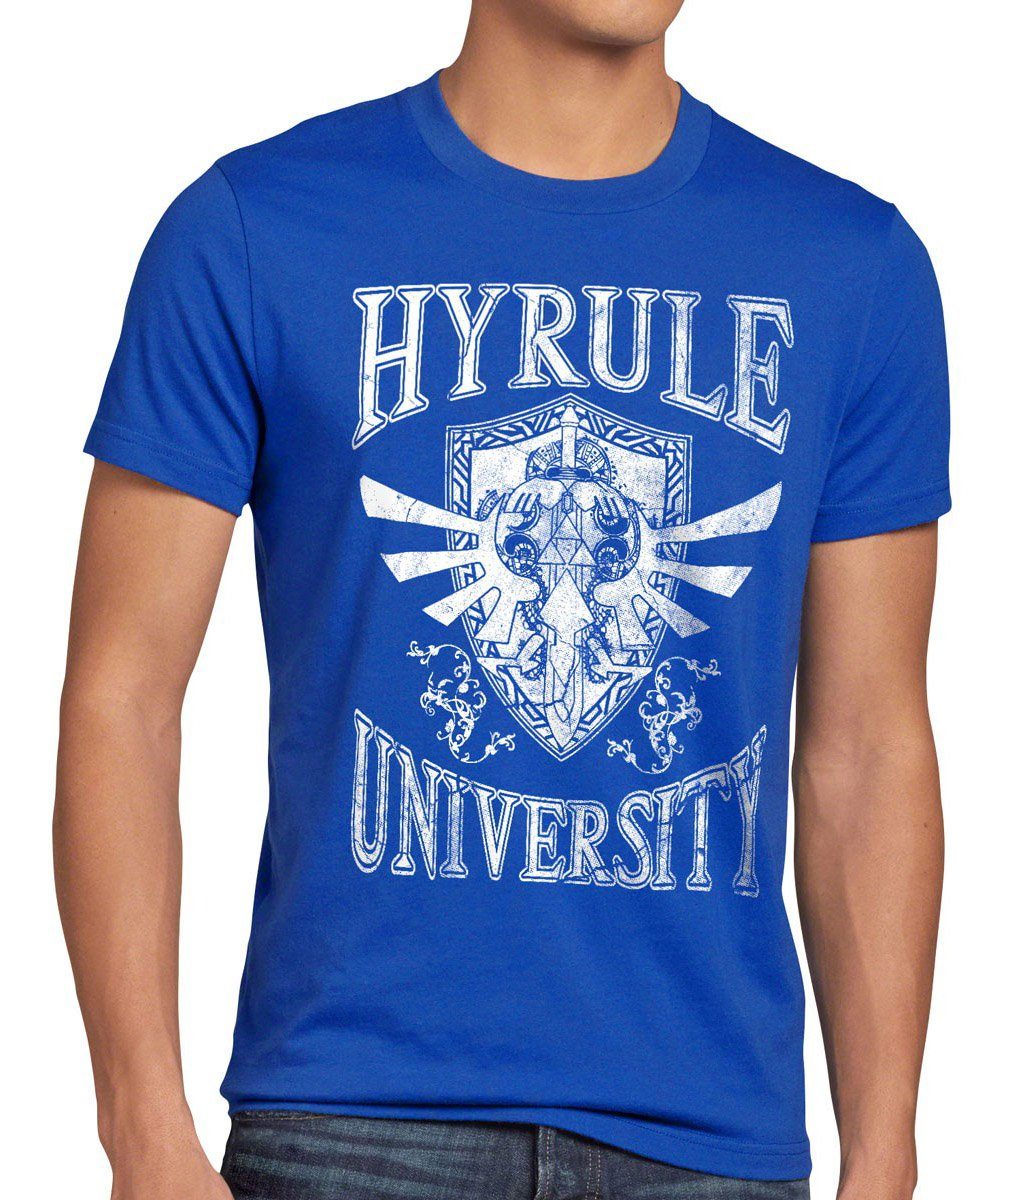 style3 Print-Shirt T-Shirt University blau ocarina switch Hyrule Herren past time waker wii zelda link